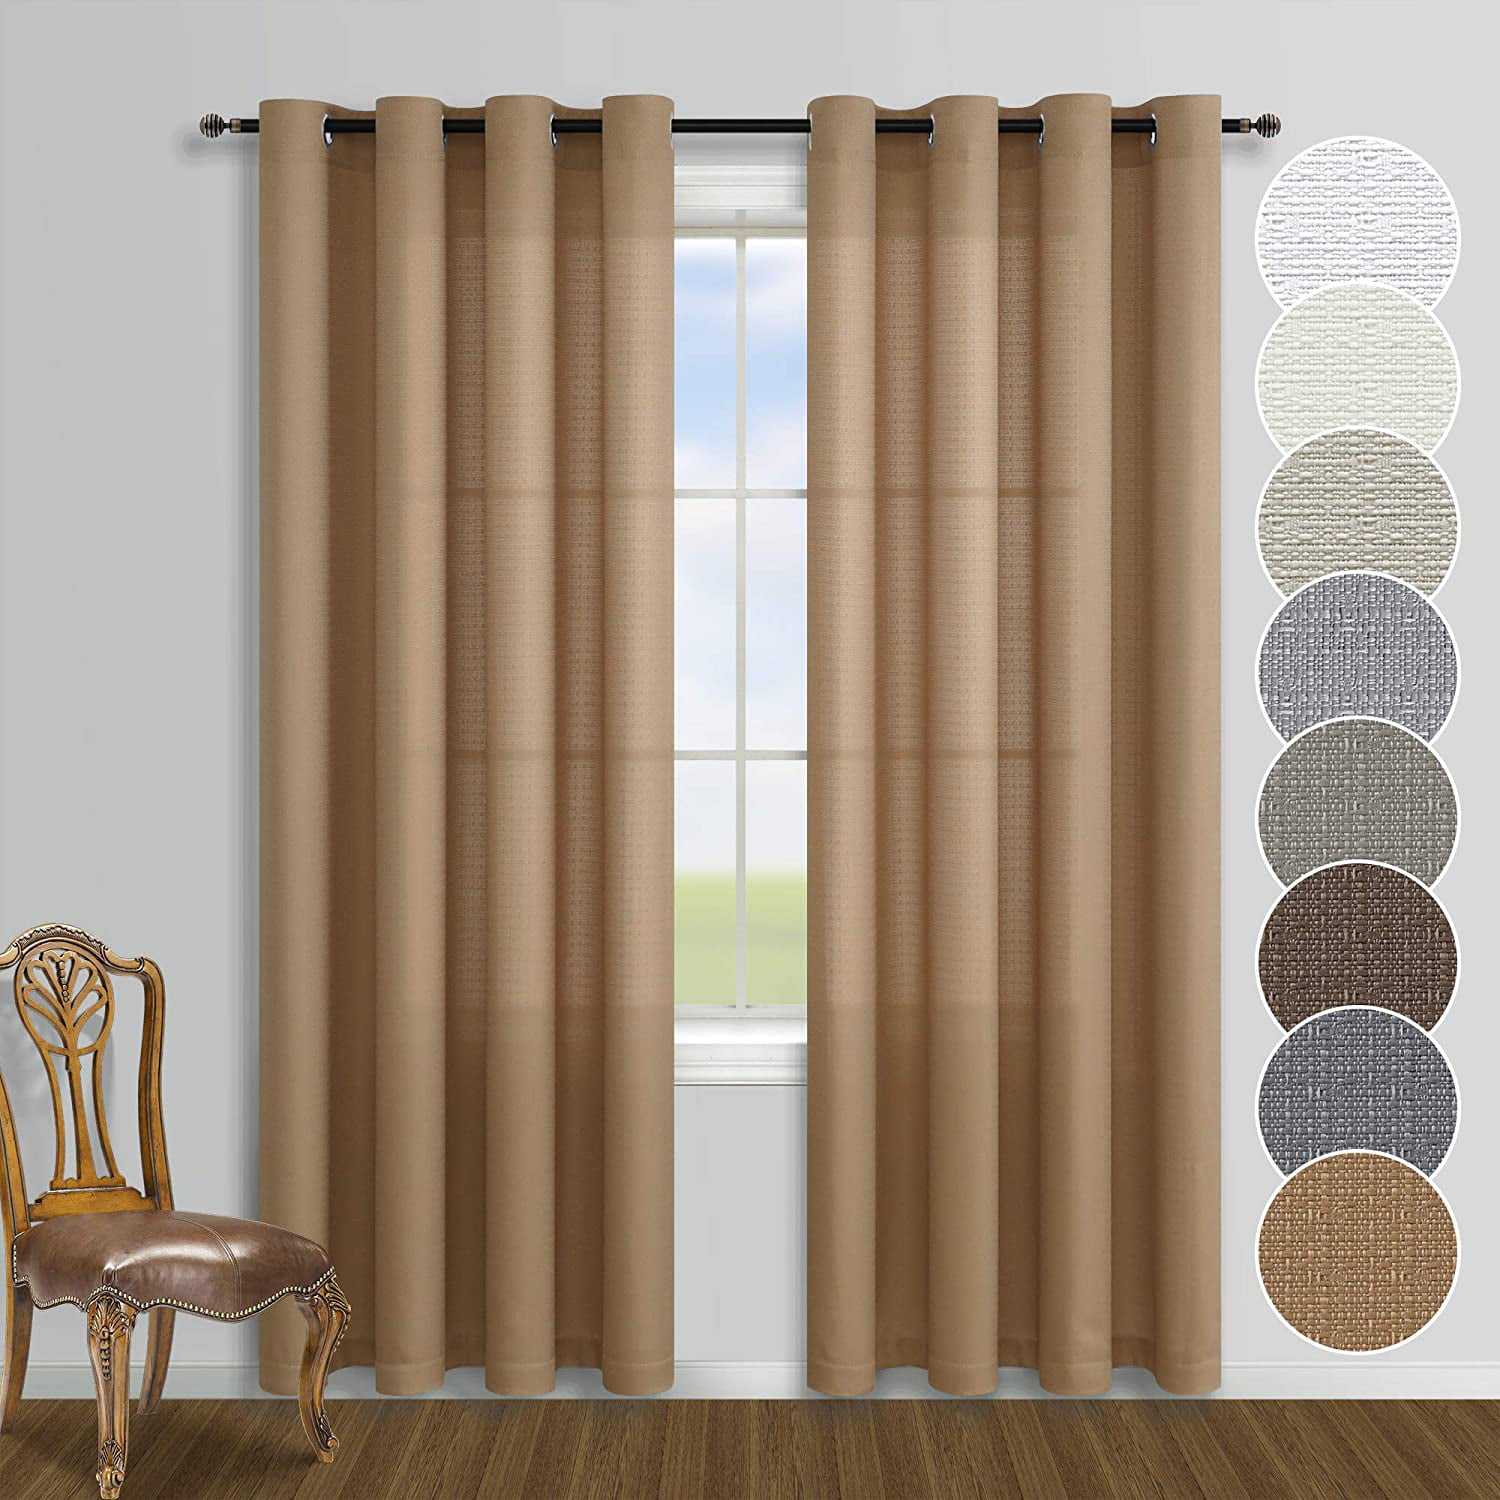 2 panels Linen Curtains Burlap Texture Semi Sheer Window Treatment Drapes Set 